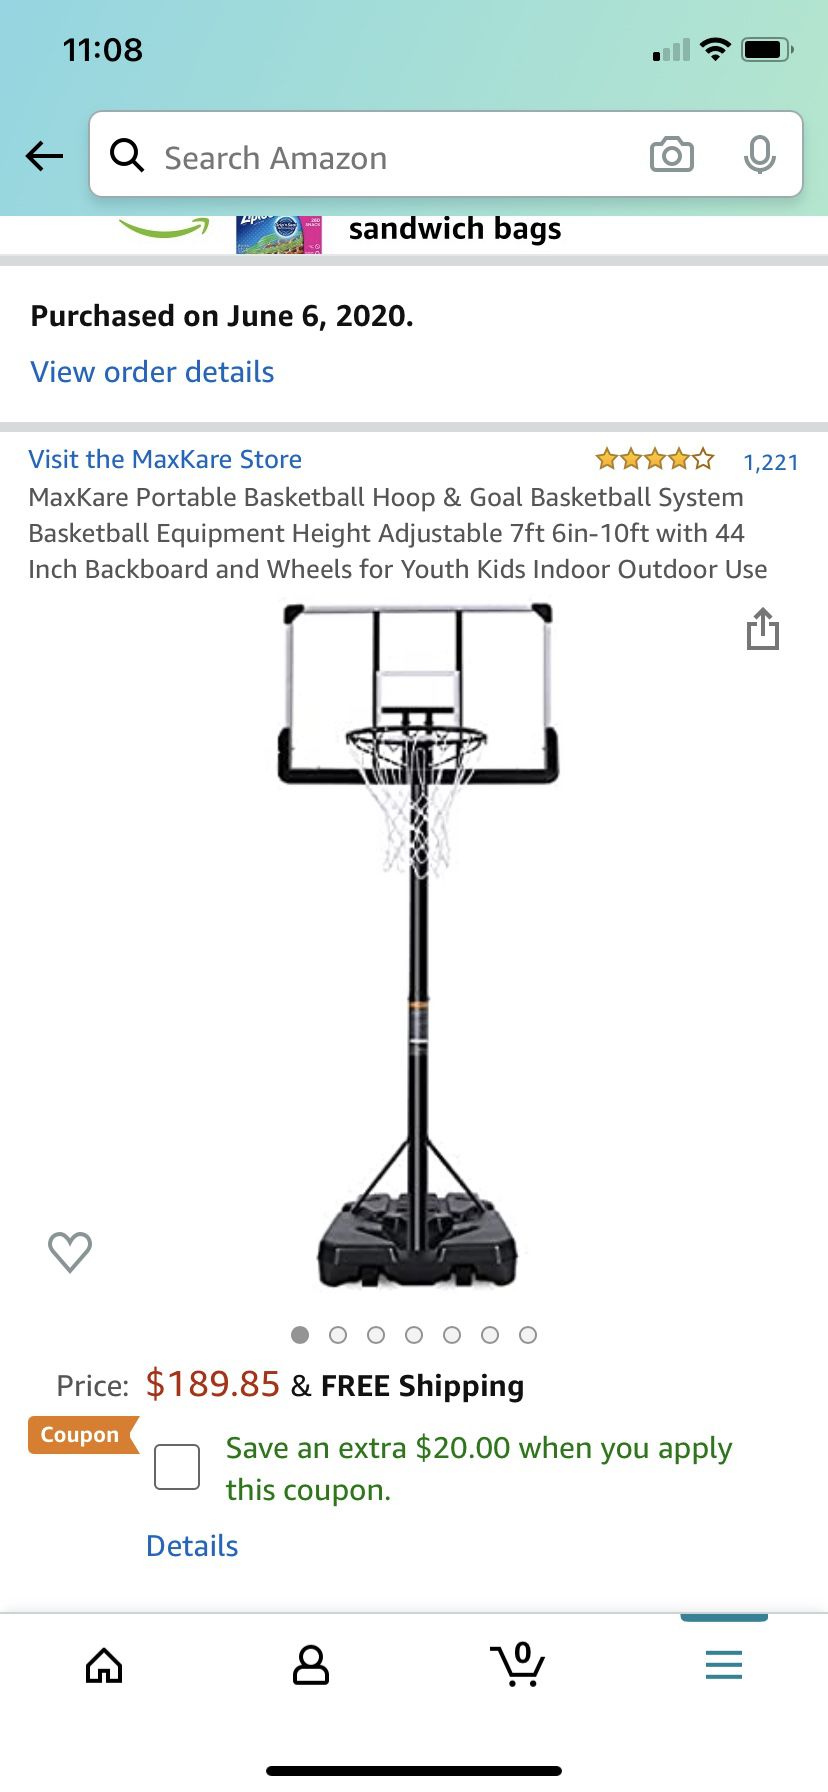 Brand new in box basketball hoop